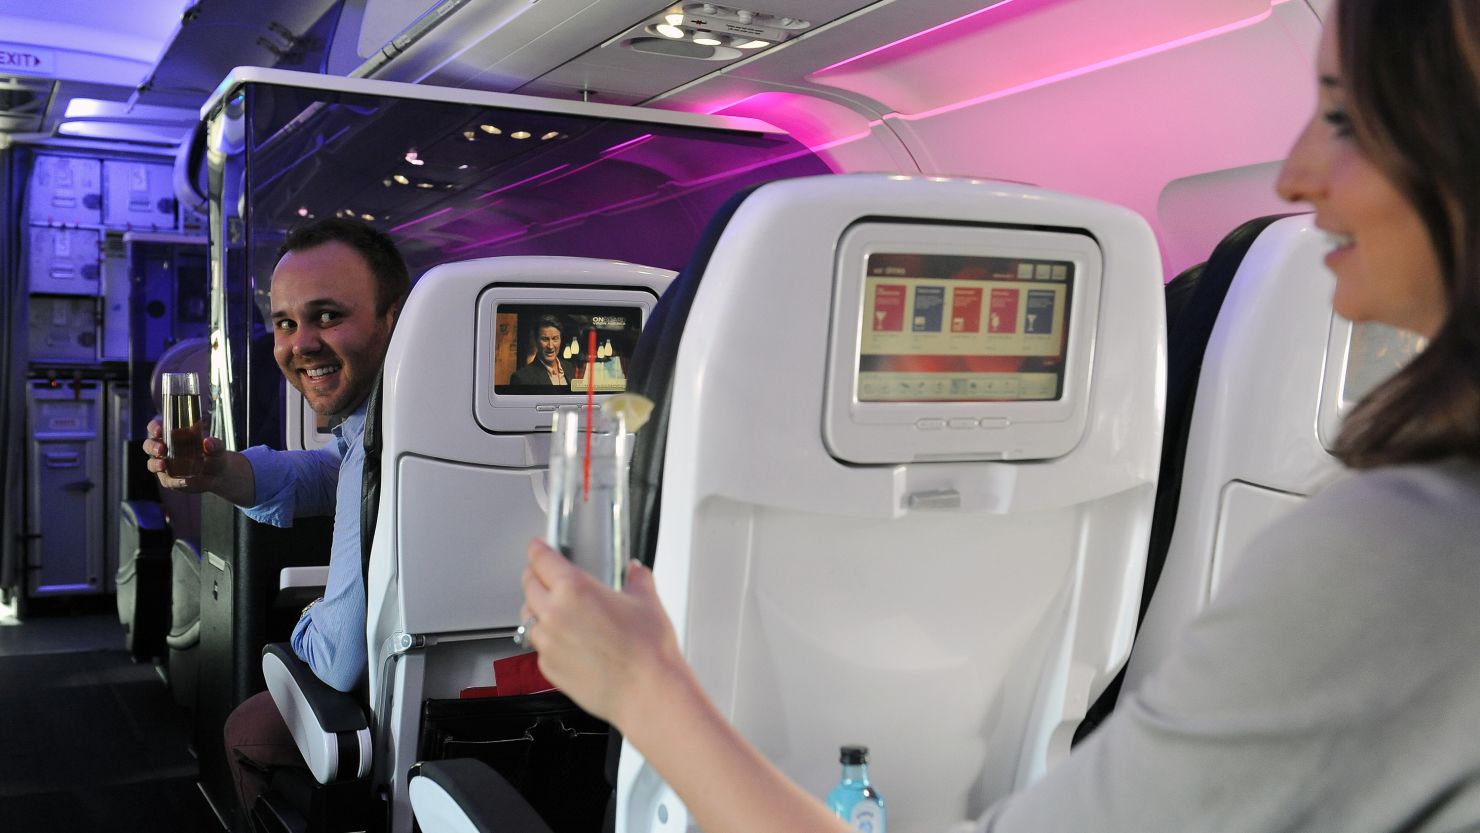 Virgin America's seat-to-seat ordering service: Brilliant or creepy? 